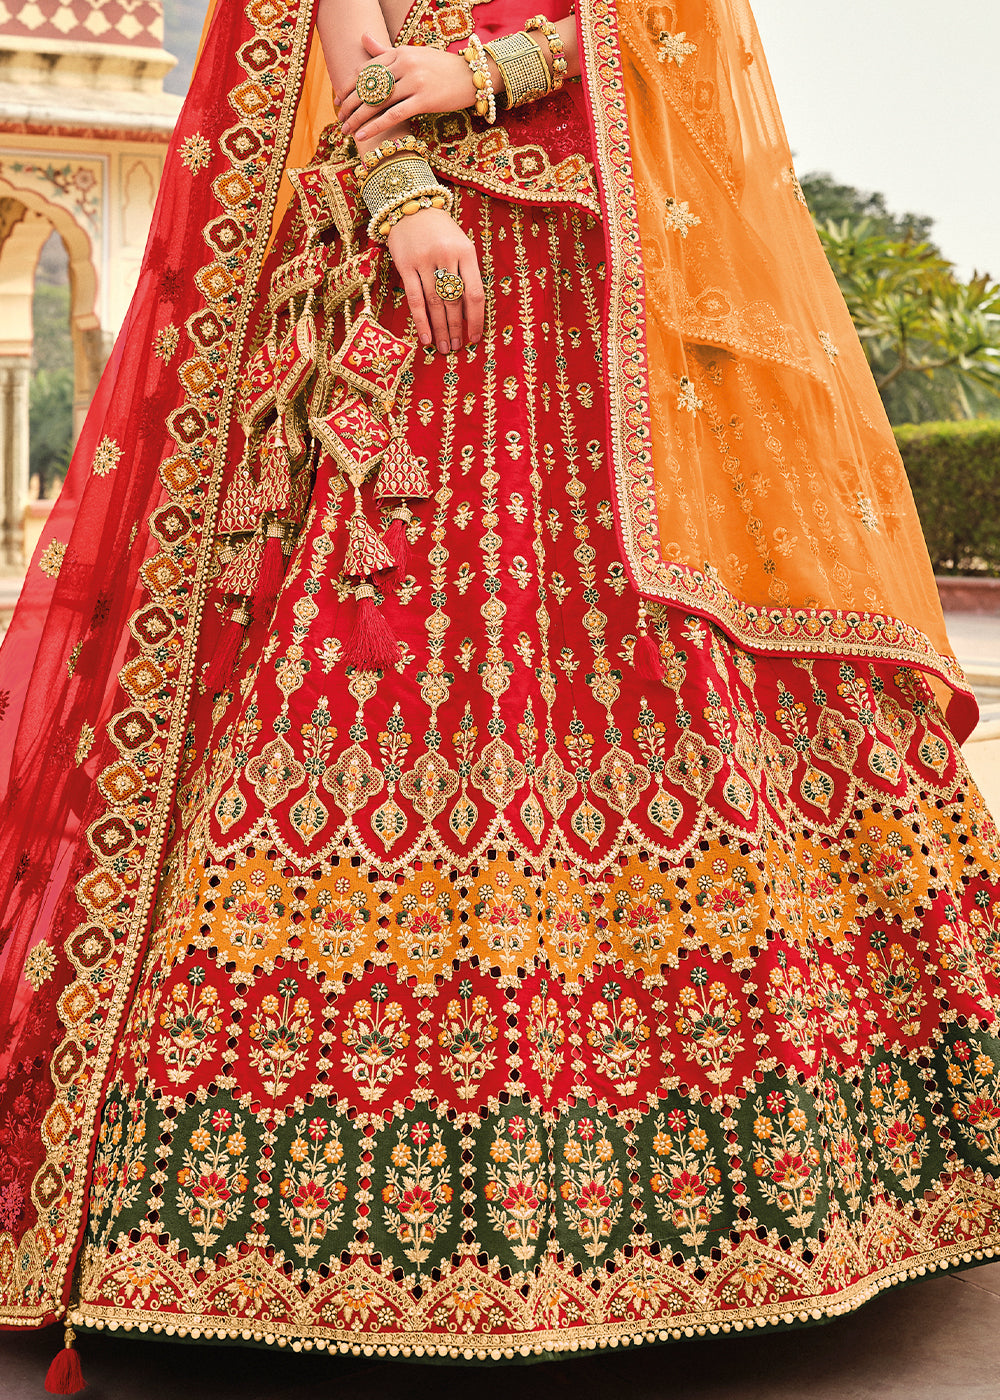 Golden Bridal Lehenga with Red Dupatta Pakistani Wedding Dresses | Golden  bridal lehenga, Beautiful red dresses, Pakistani wedding dresses